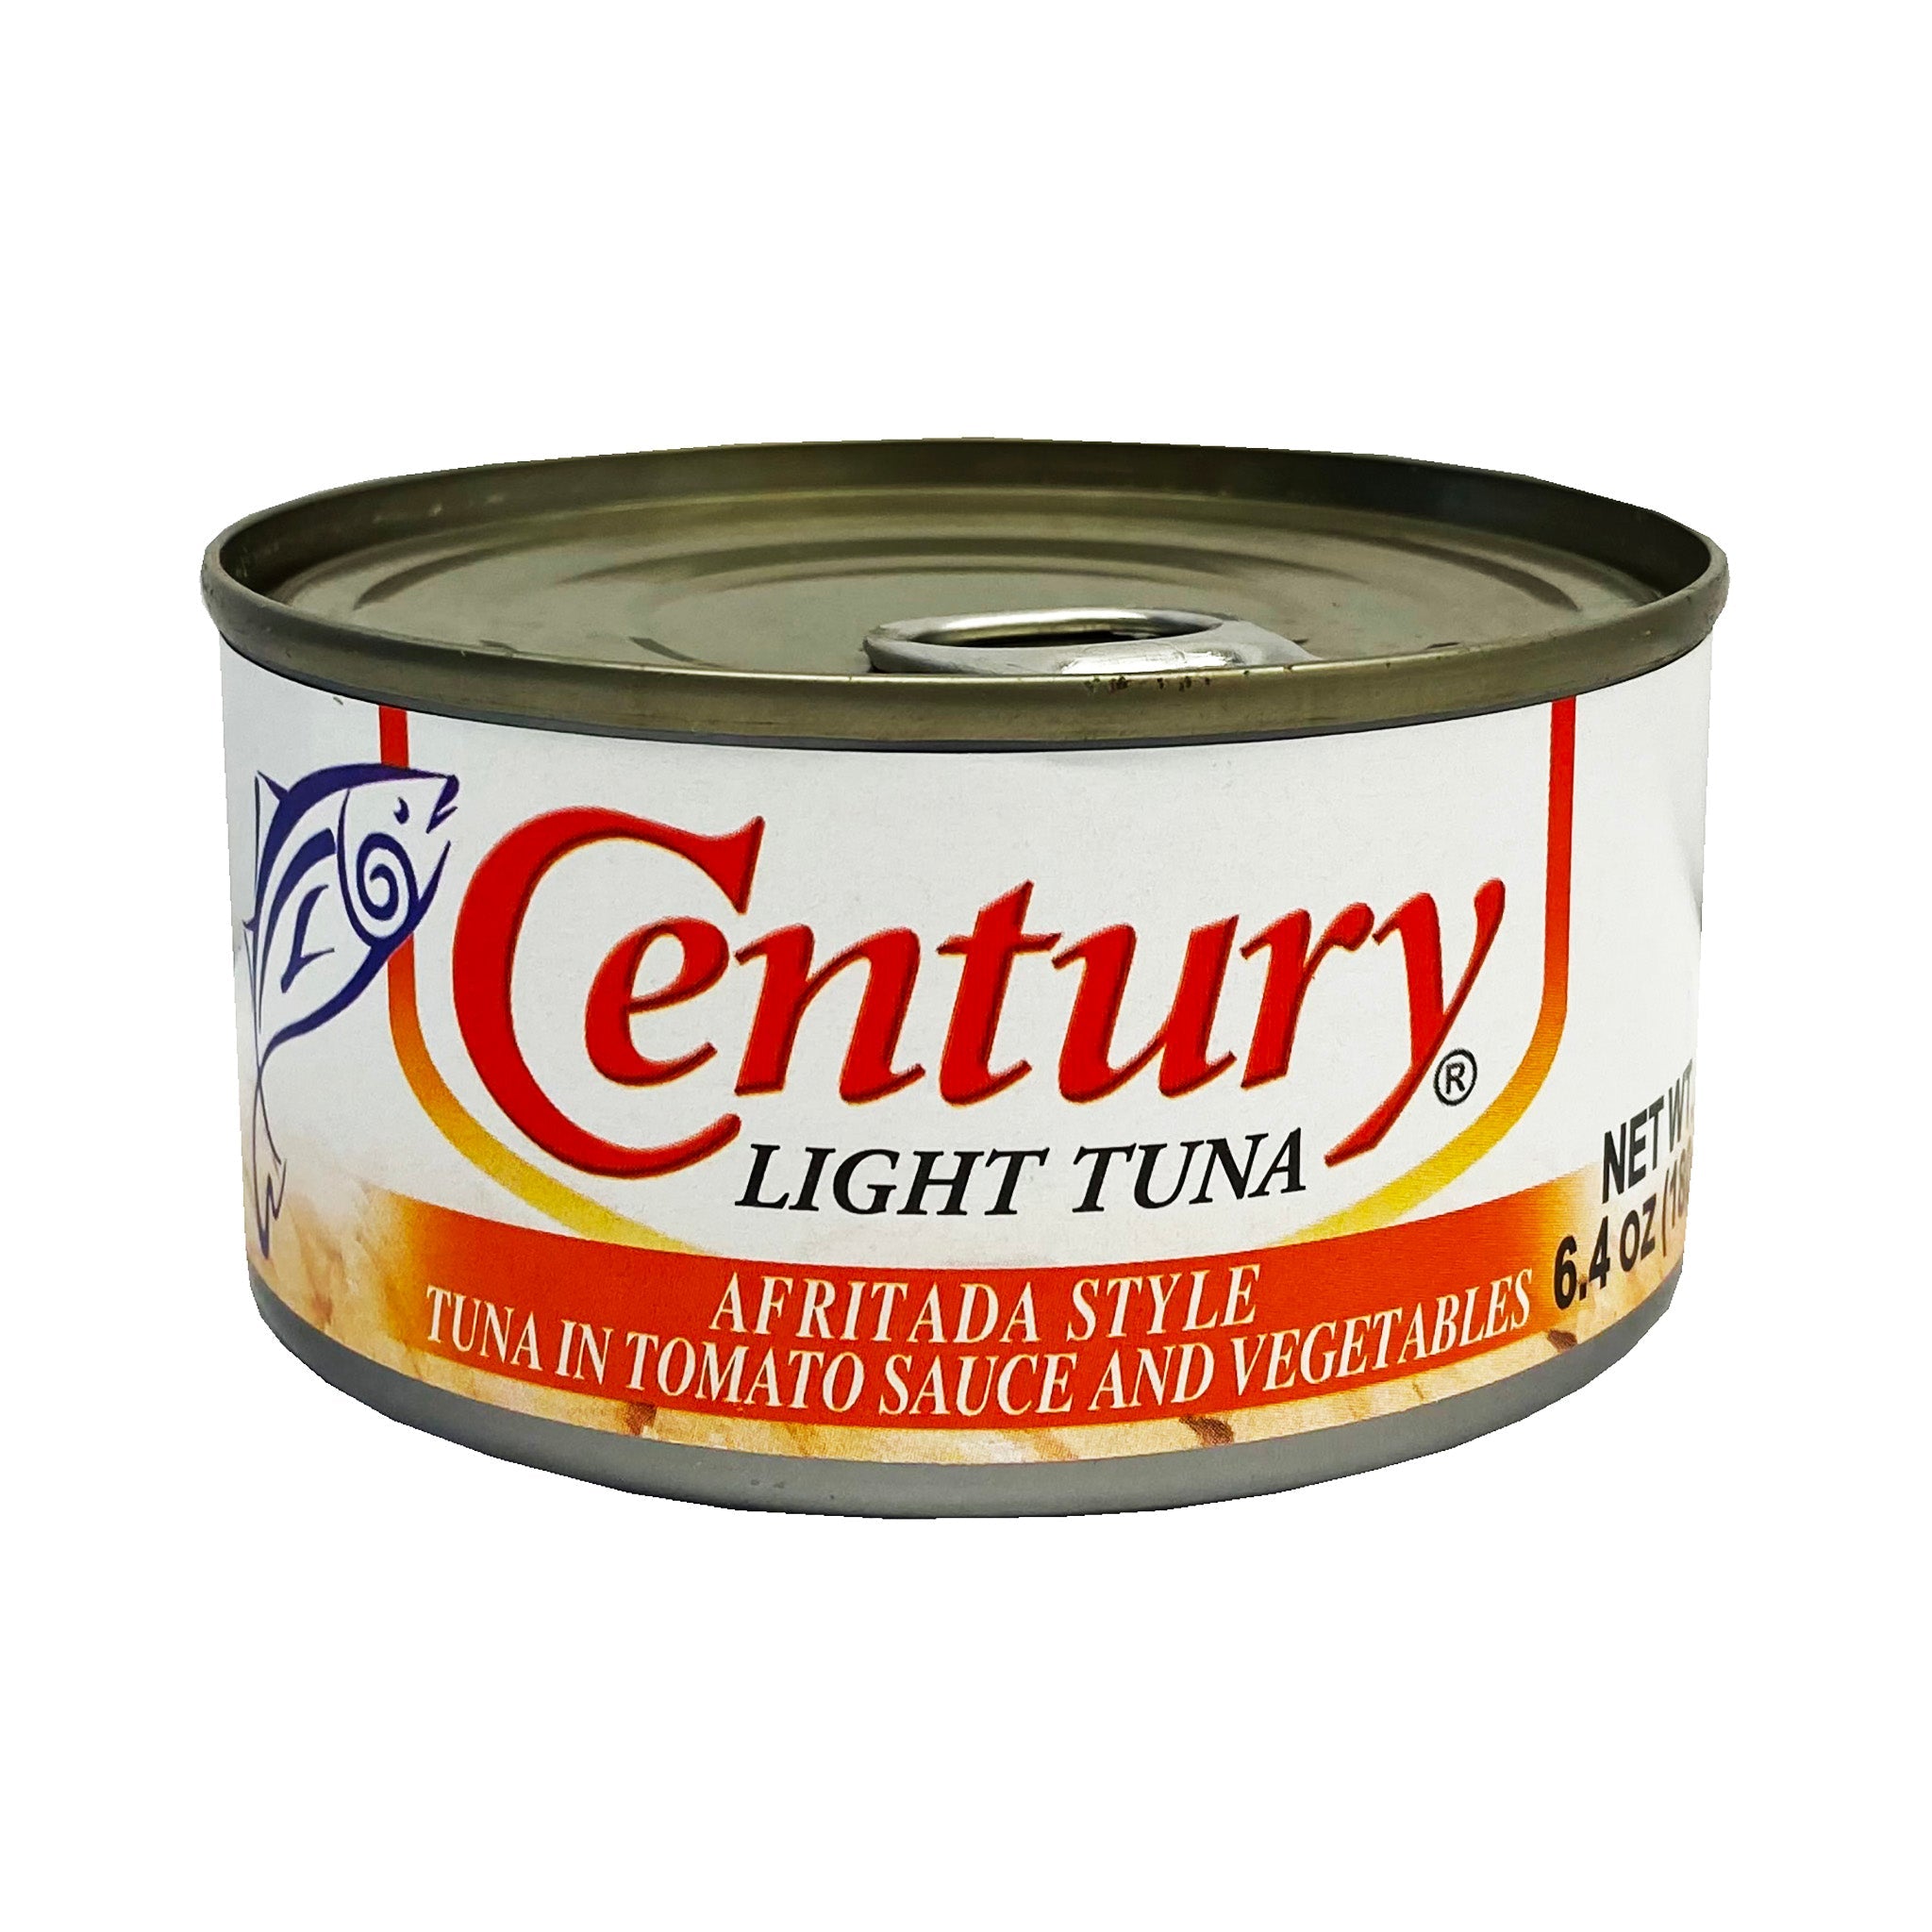 Fellow det samme snyde Century Light Tuna - Afritada Style 6.4oz - Just Asian Food